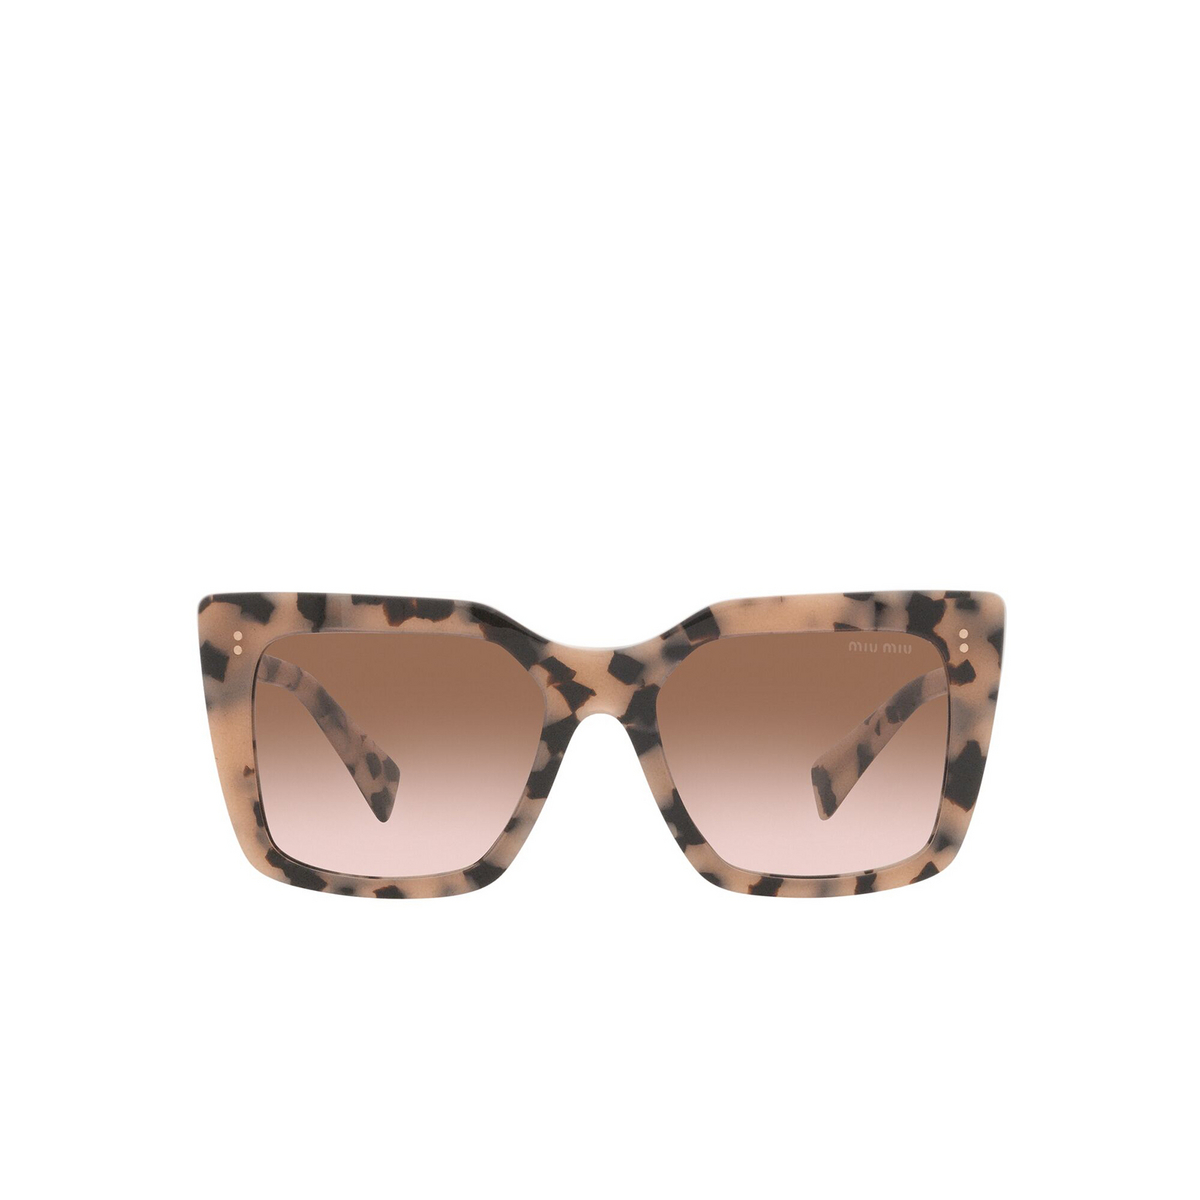 Miu Miu® Square Sunglasses: MU 02WS color Pink Havana 07D0A6 - front view.